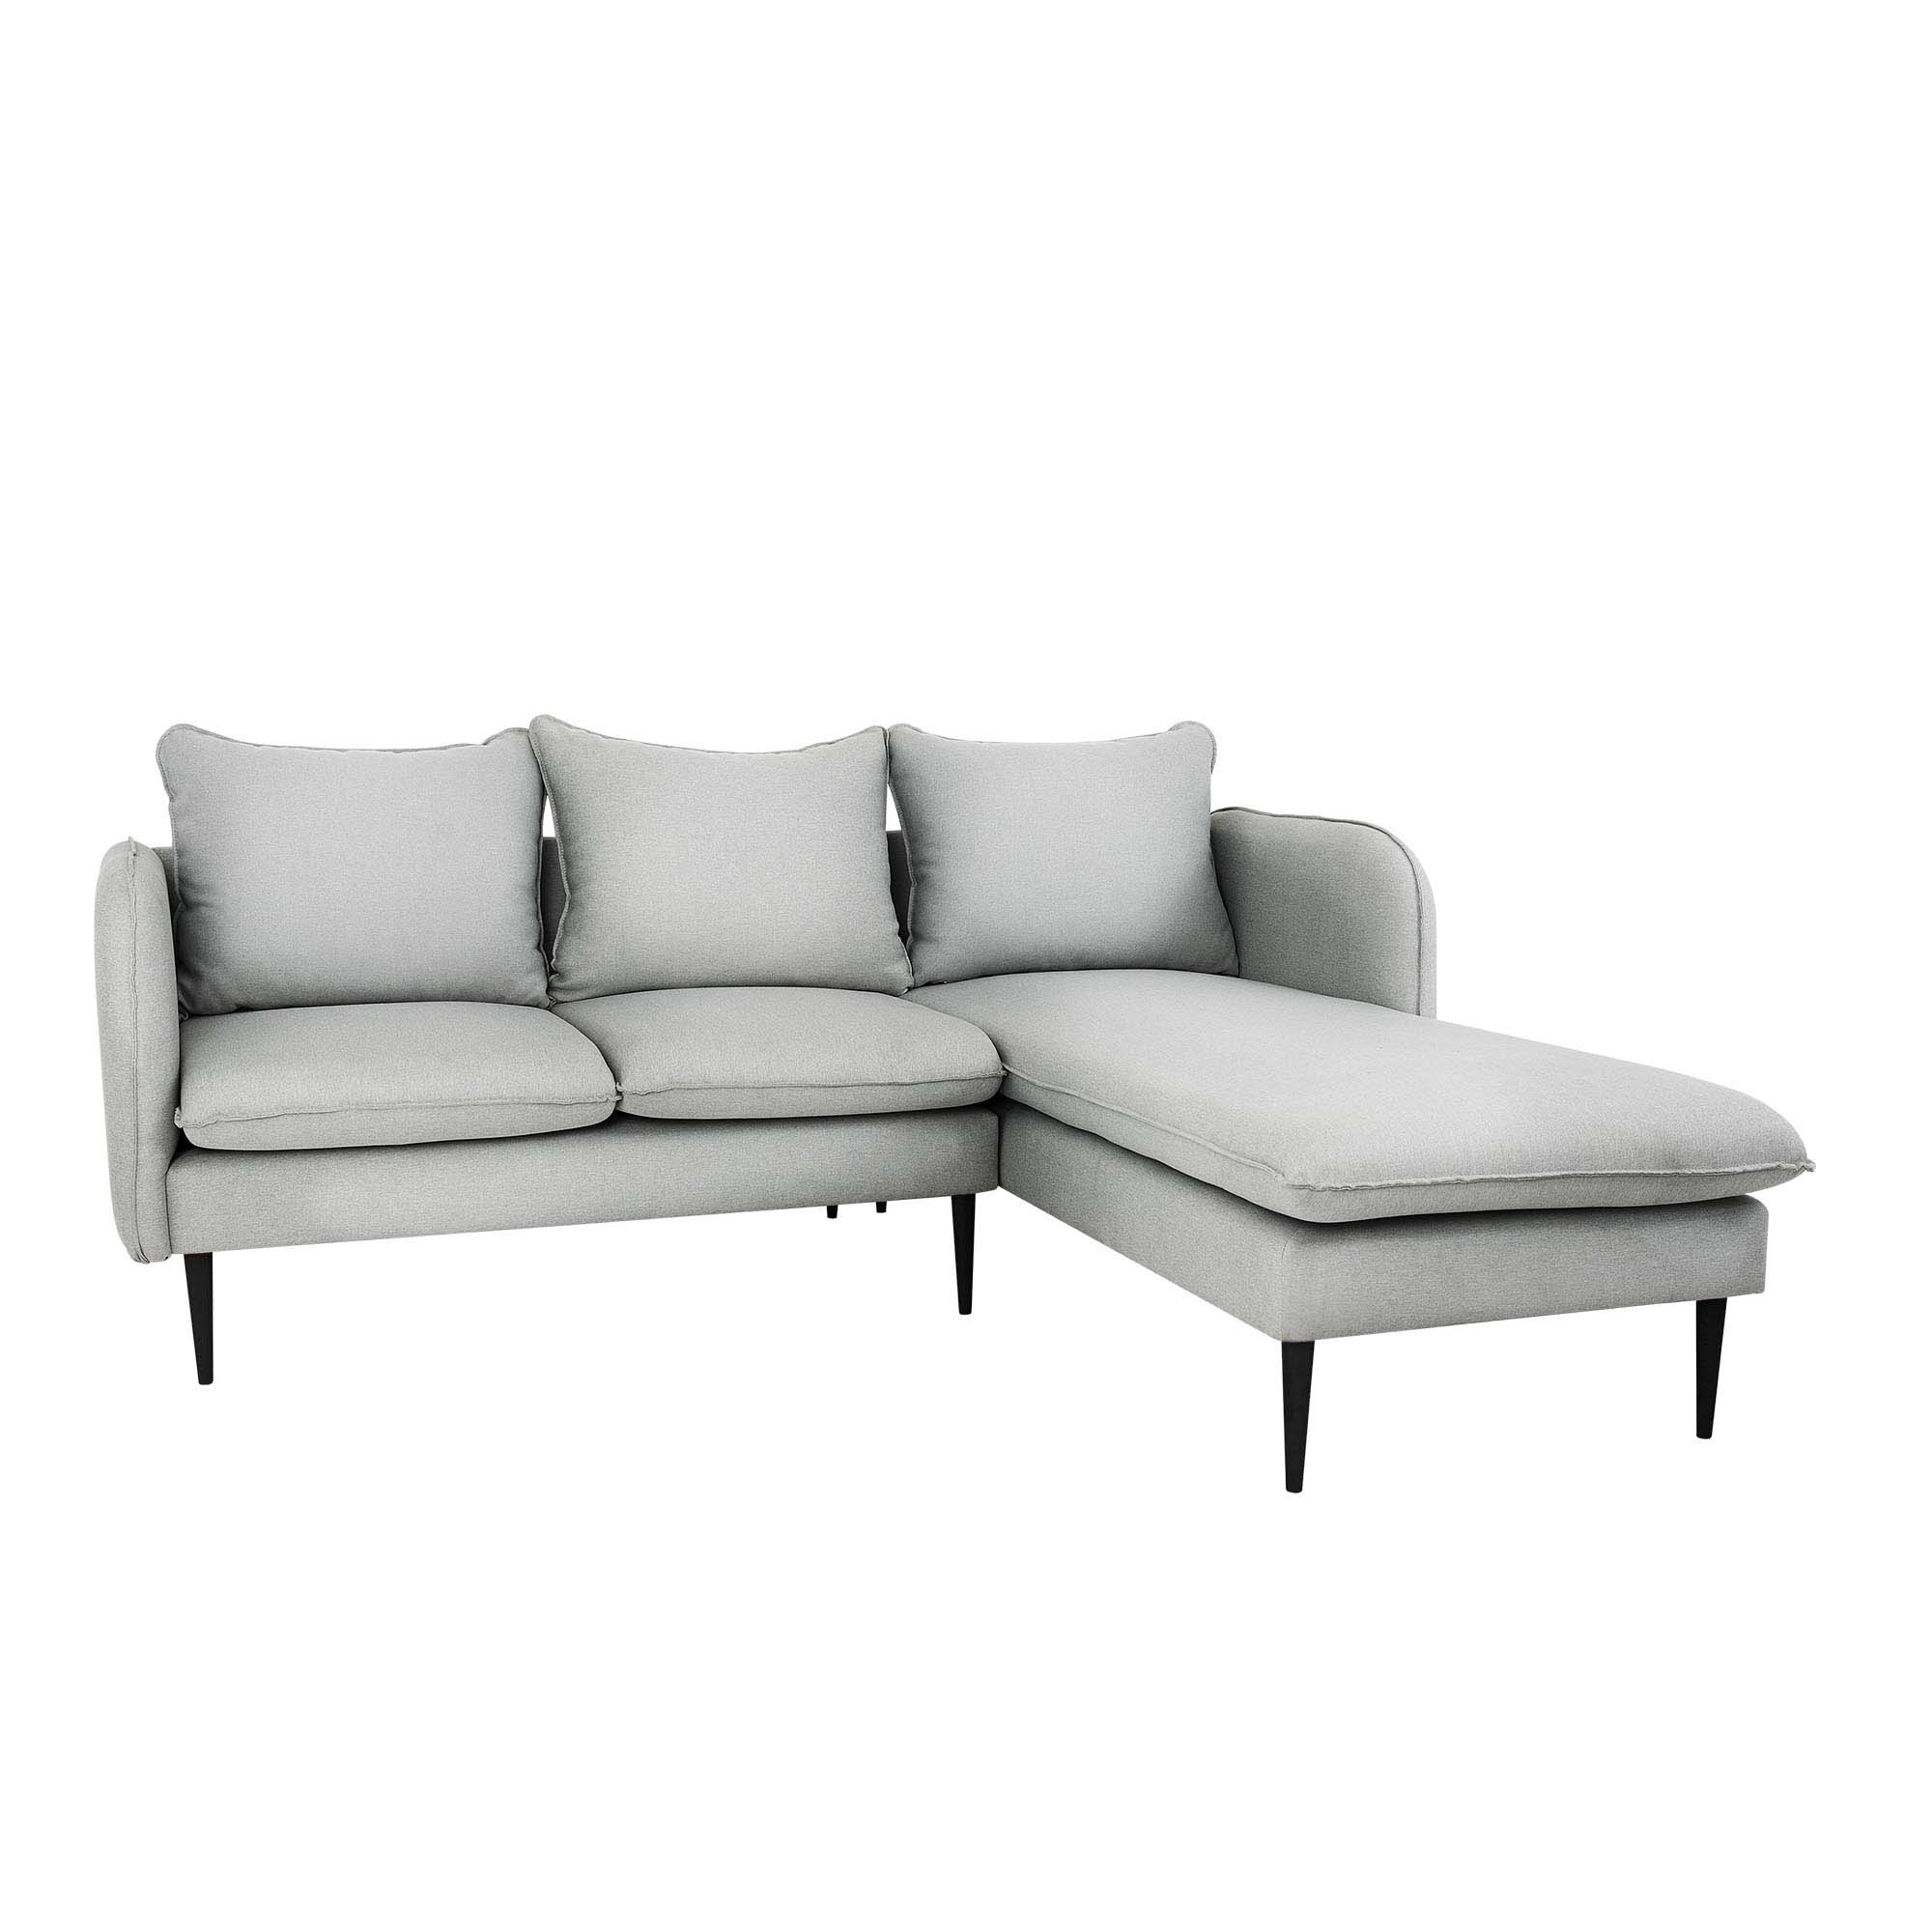 POSH BLACK Corner Sofa Right upholstery colour platinum grey